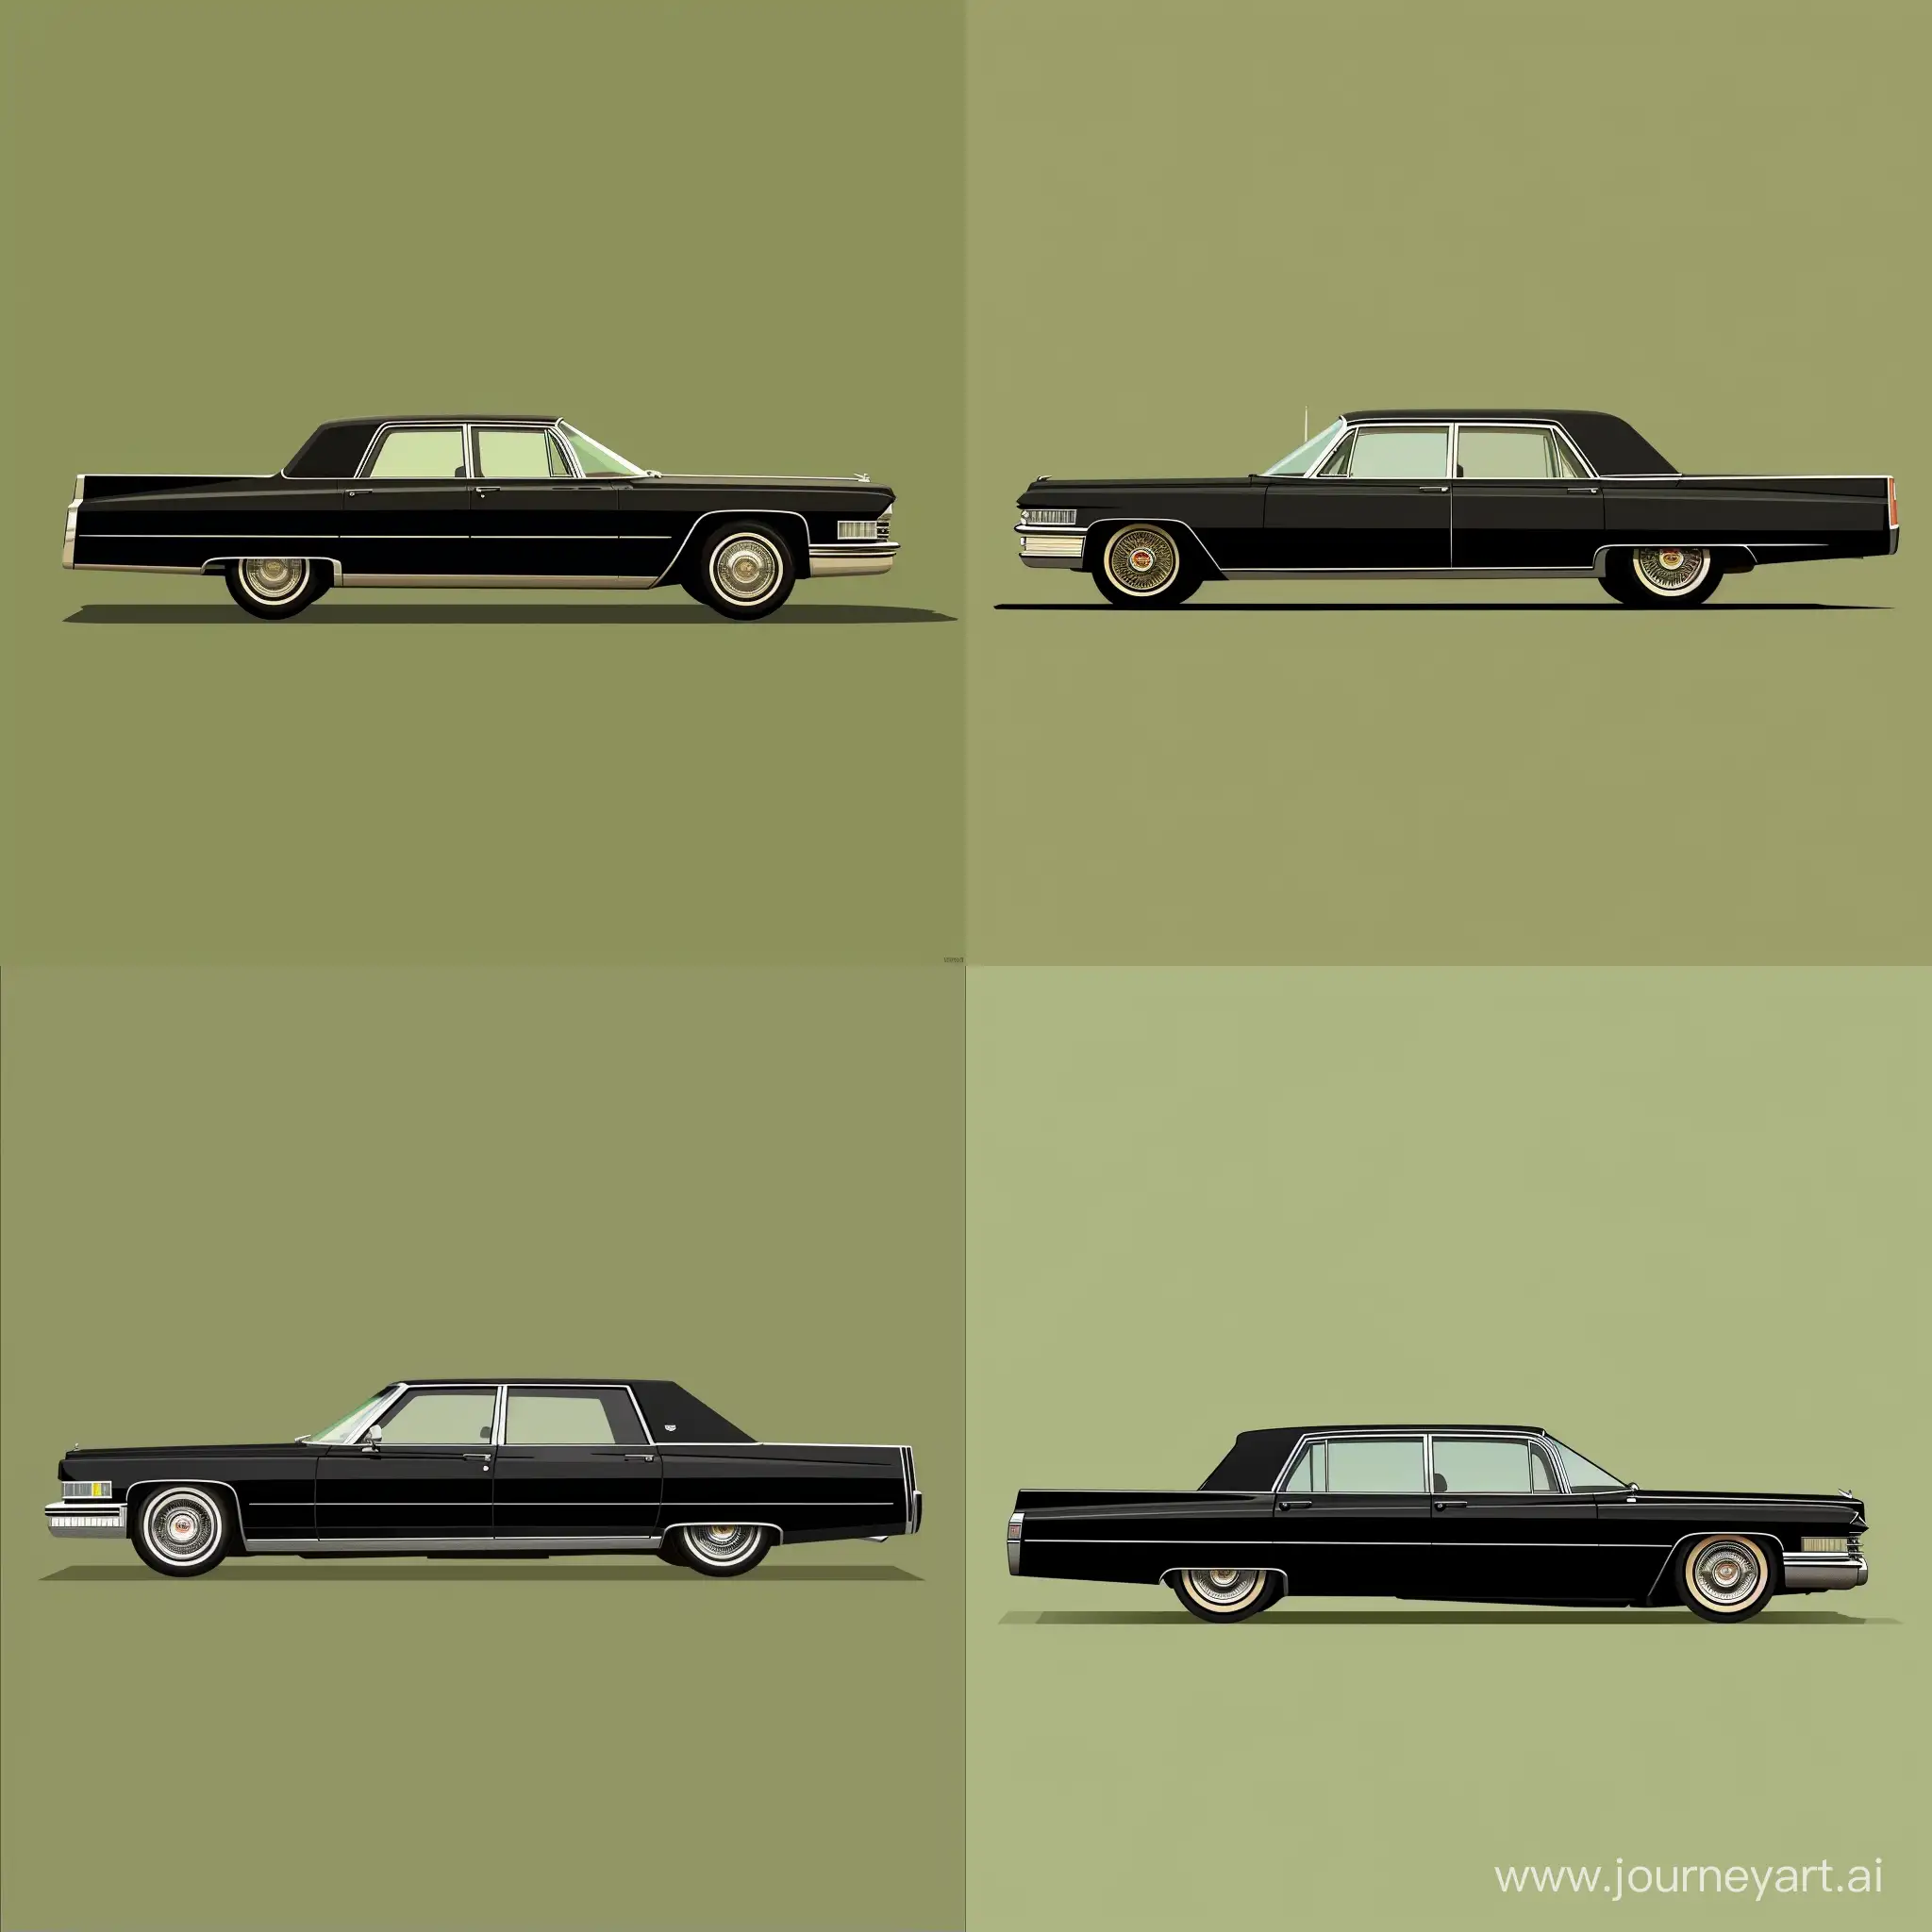 Sleek-Black-Cadillac-Brougham-2D-Illustration-on-Olive-Green-Background